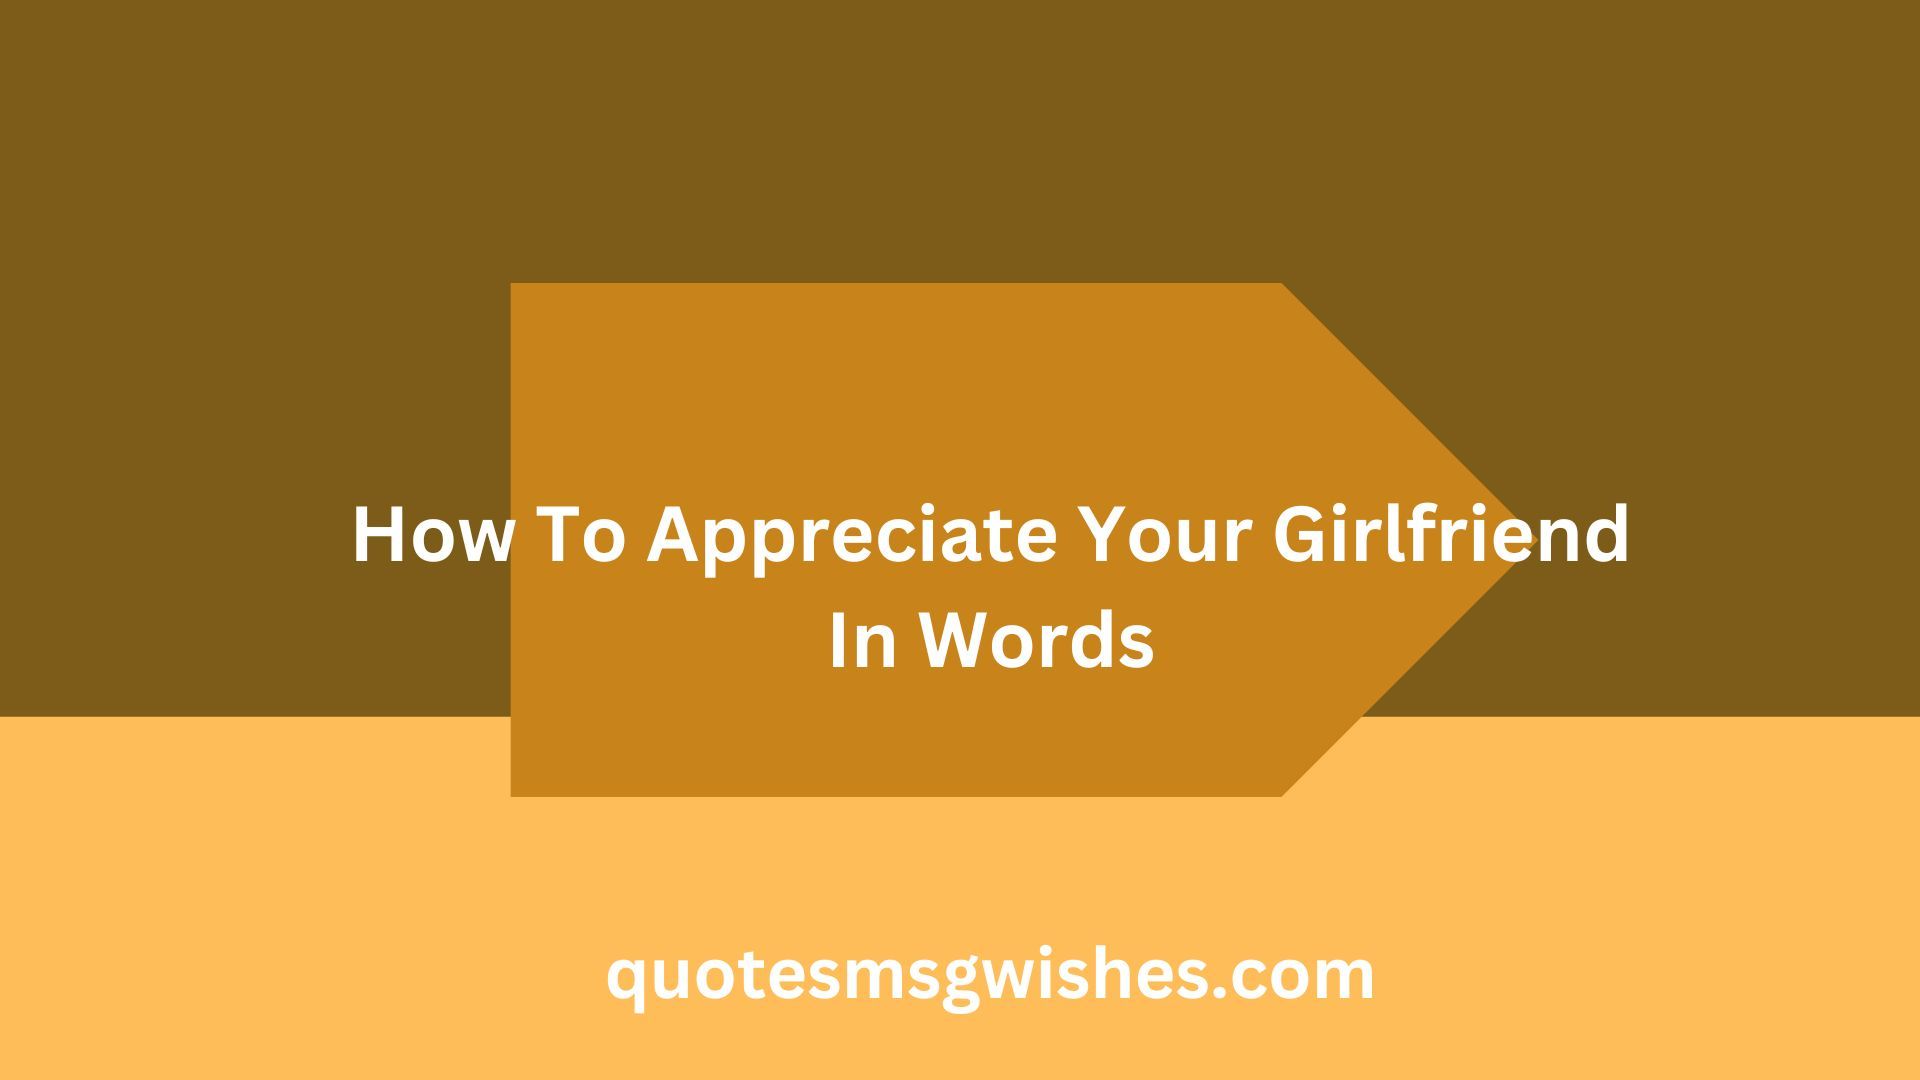 How To Appreciate Your Girlfriend In Words